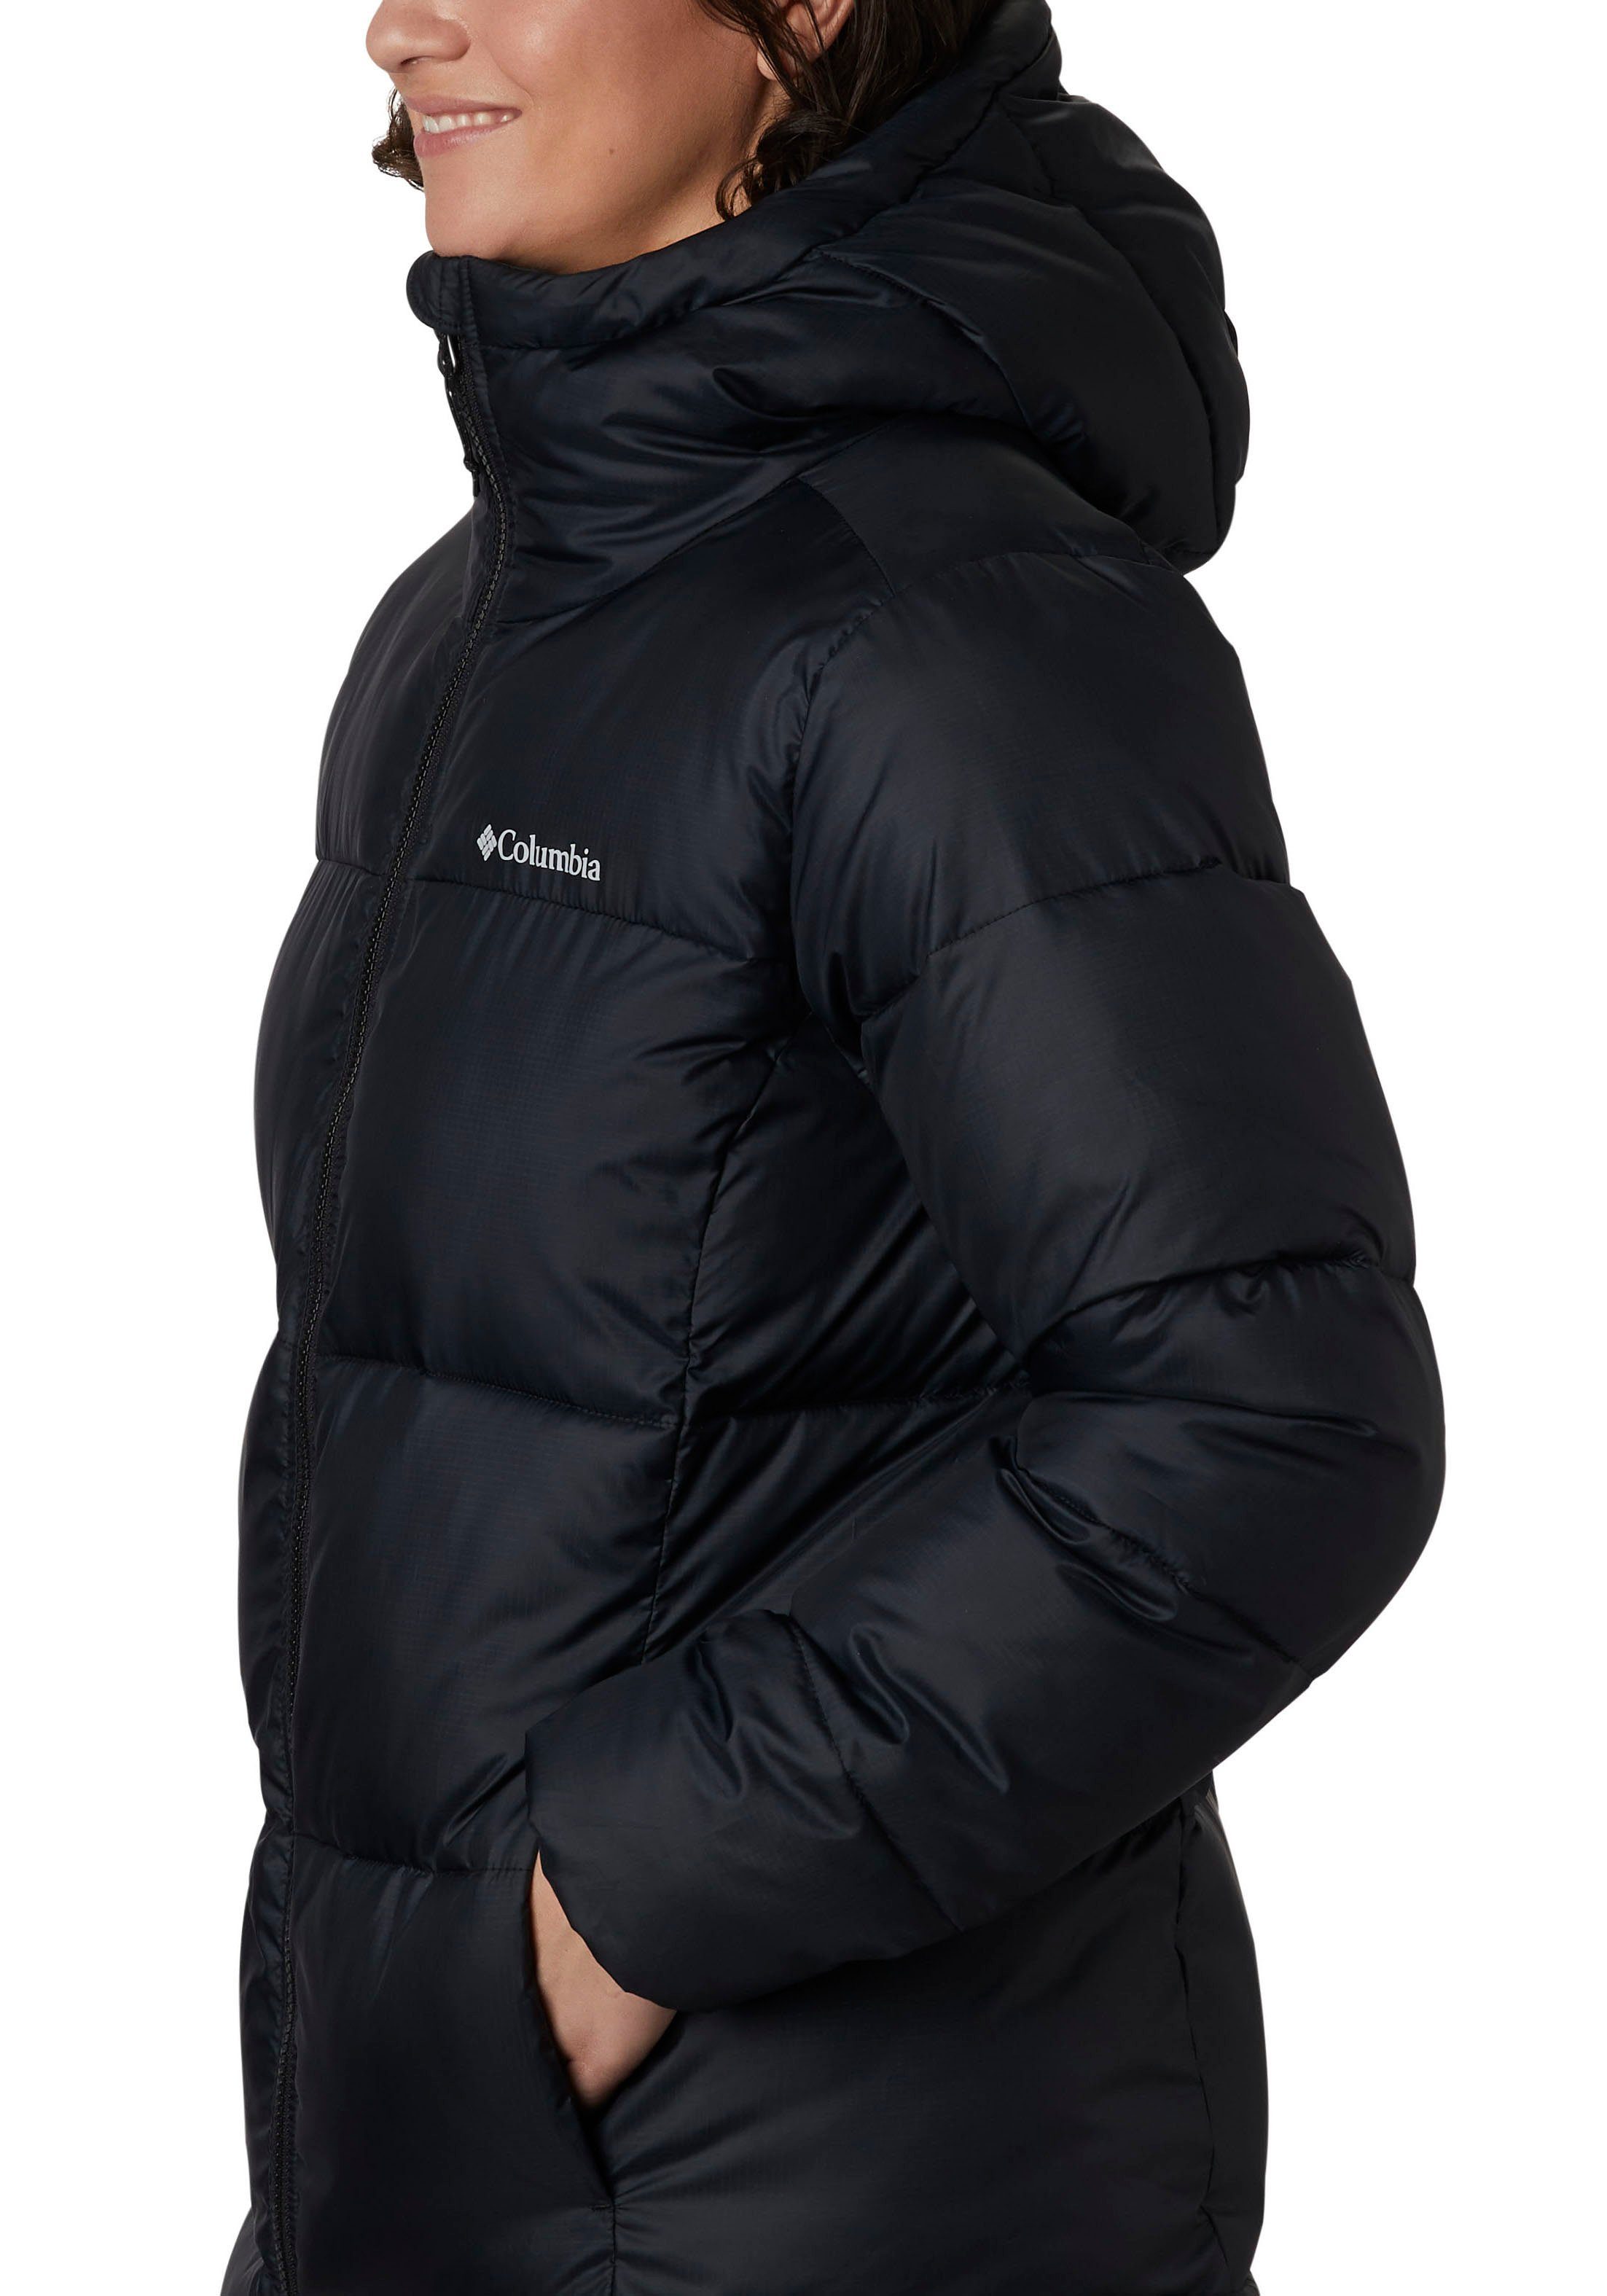 Steppjacke Hooded Mid black Puffect Columbia Jacket